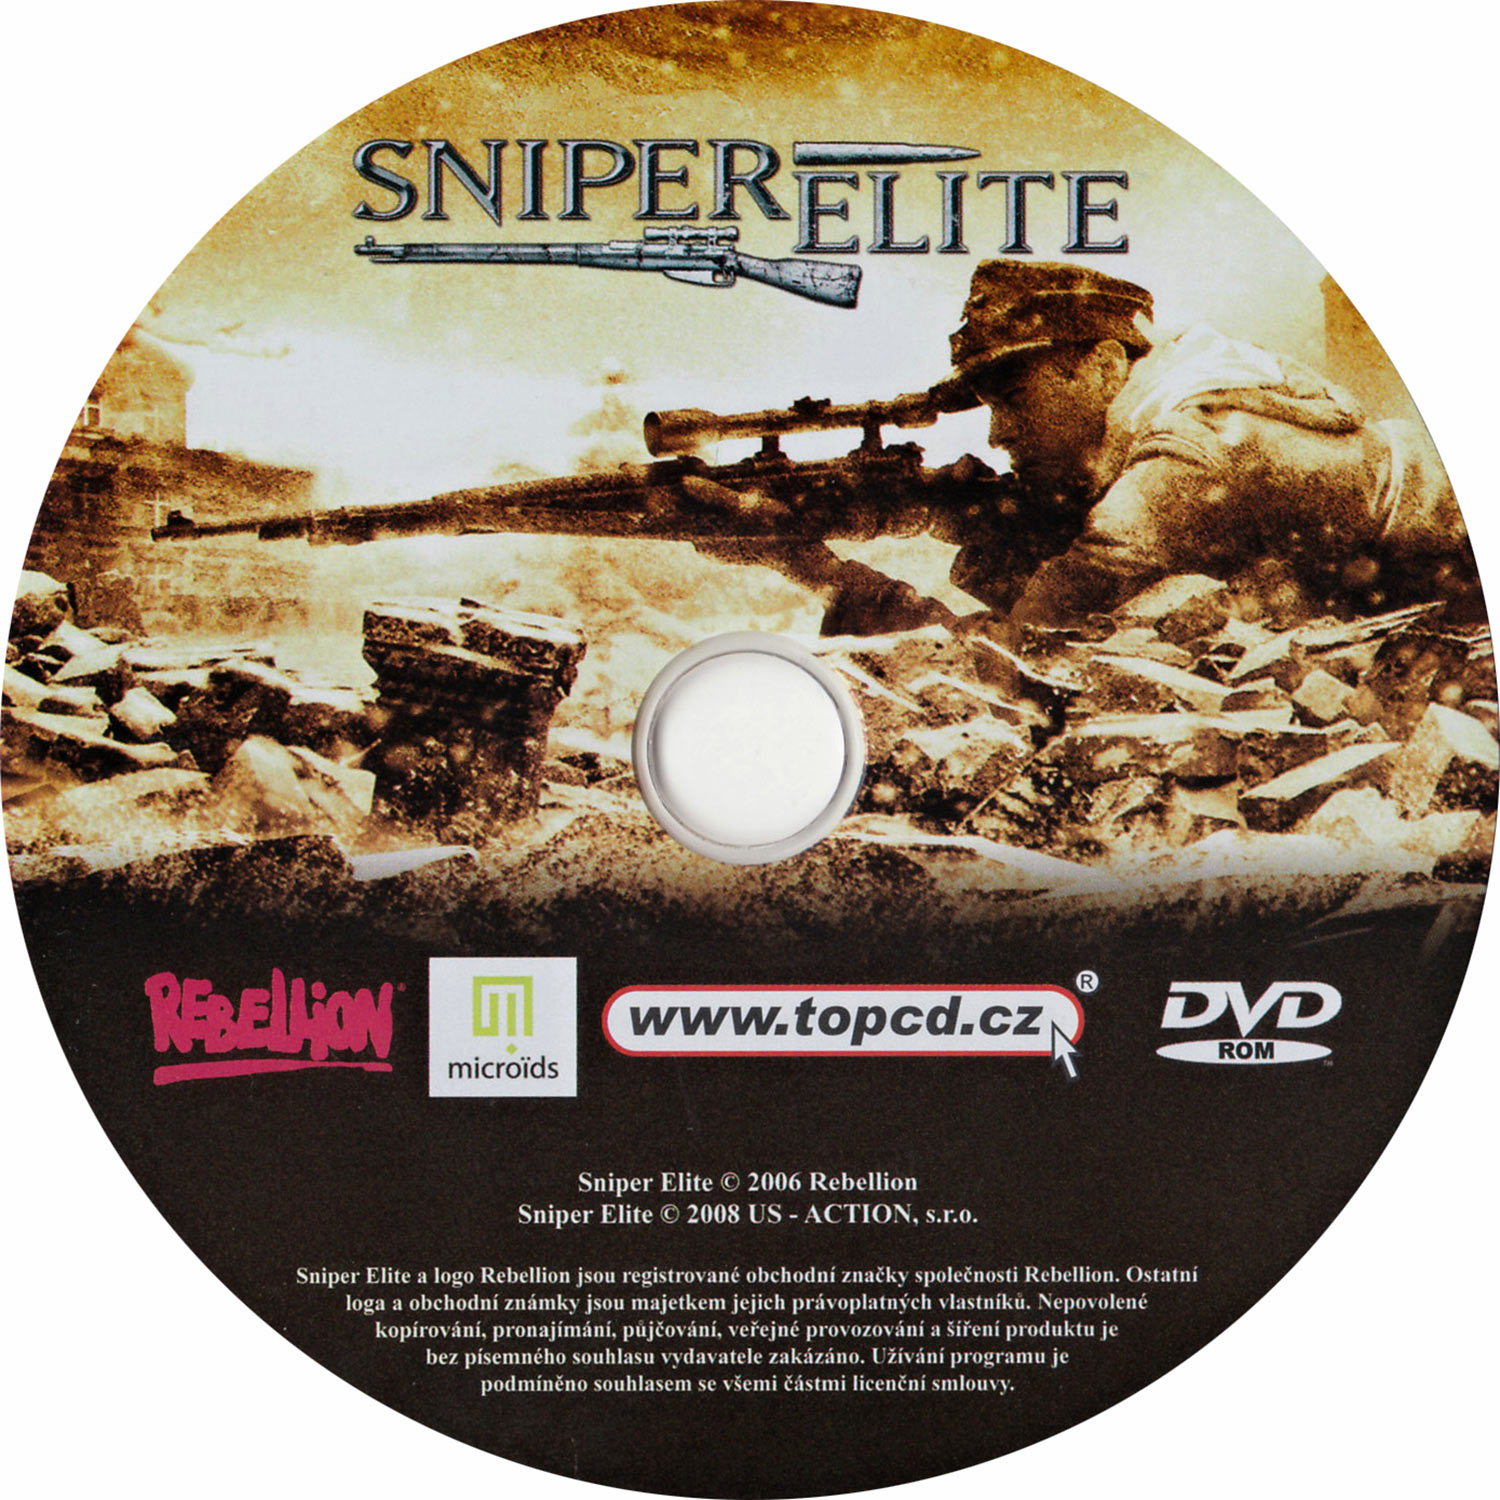 Sniper Elite - CD obal 2